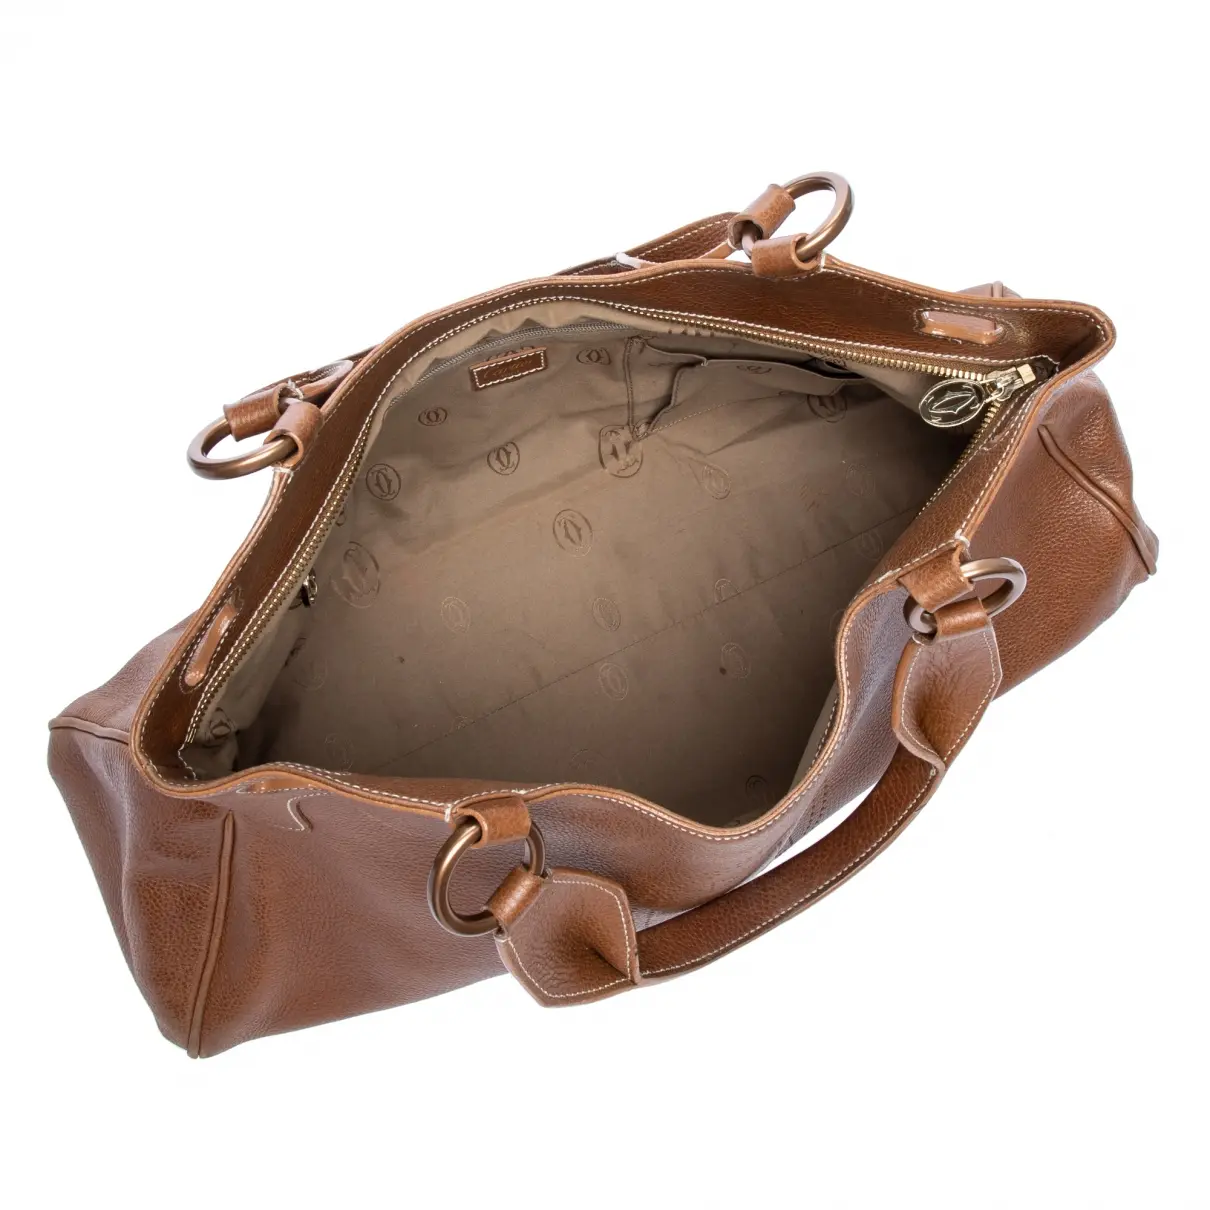 Cartier Marcello leather handbag for sale